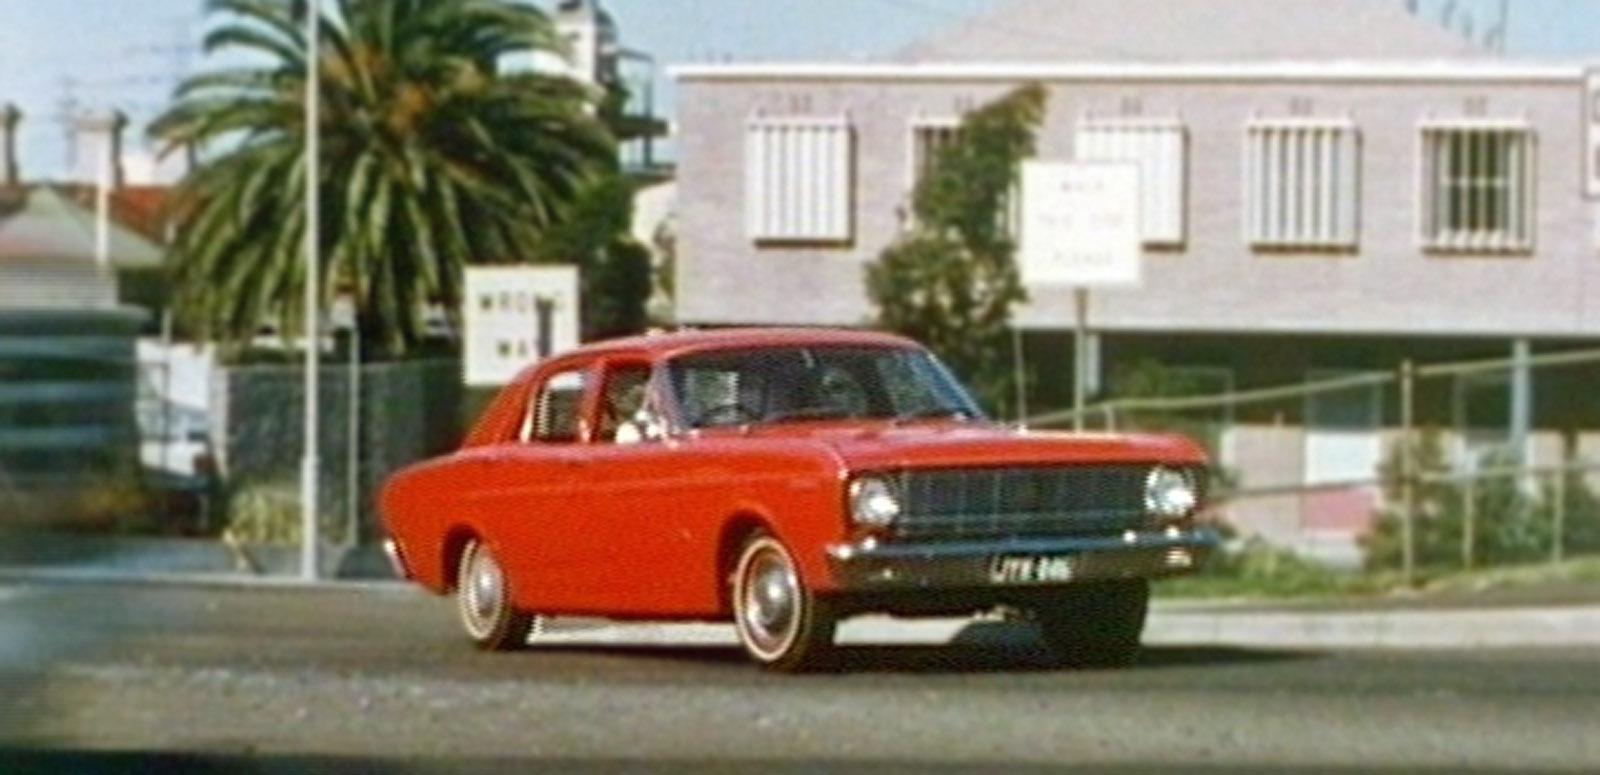 A red 1968 Ford XT Falcon drives along a suburban street.